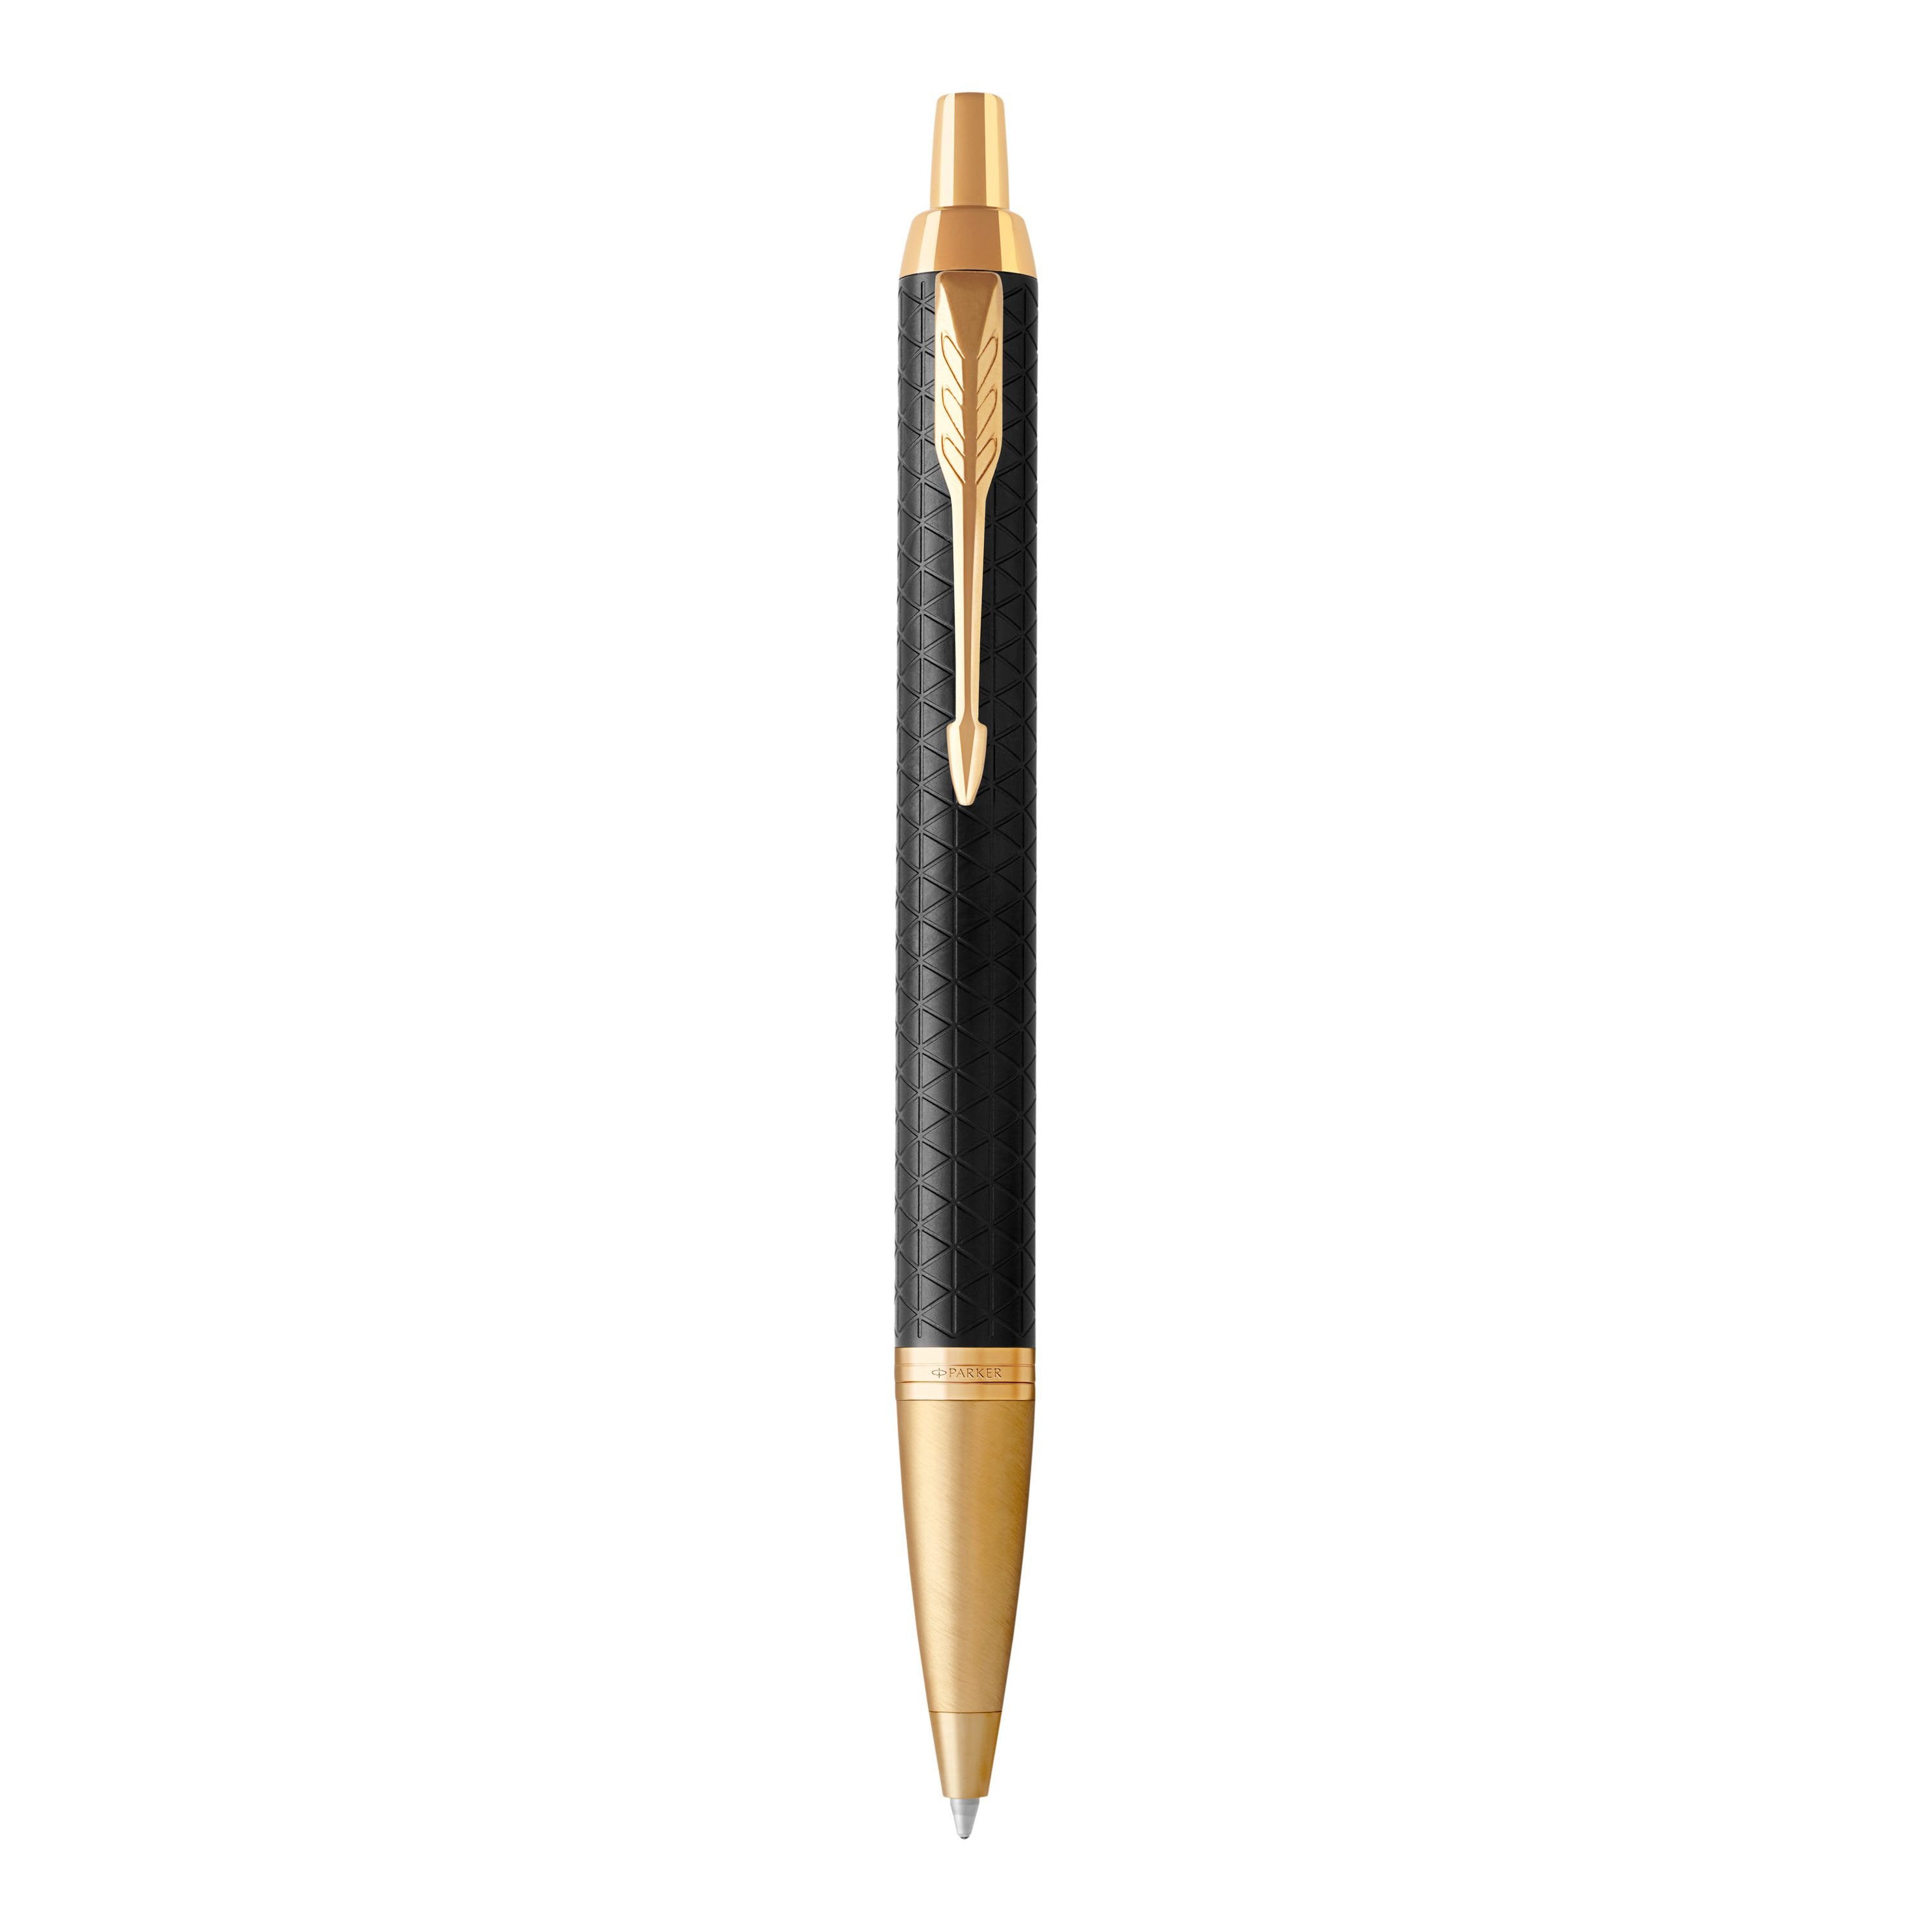 Parker IM Premium Ballpoint Pen Black/Gold